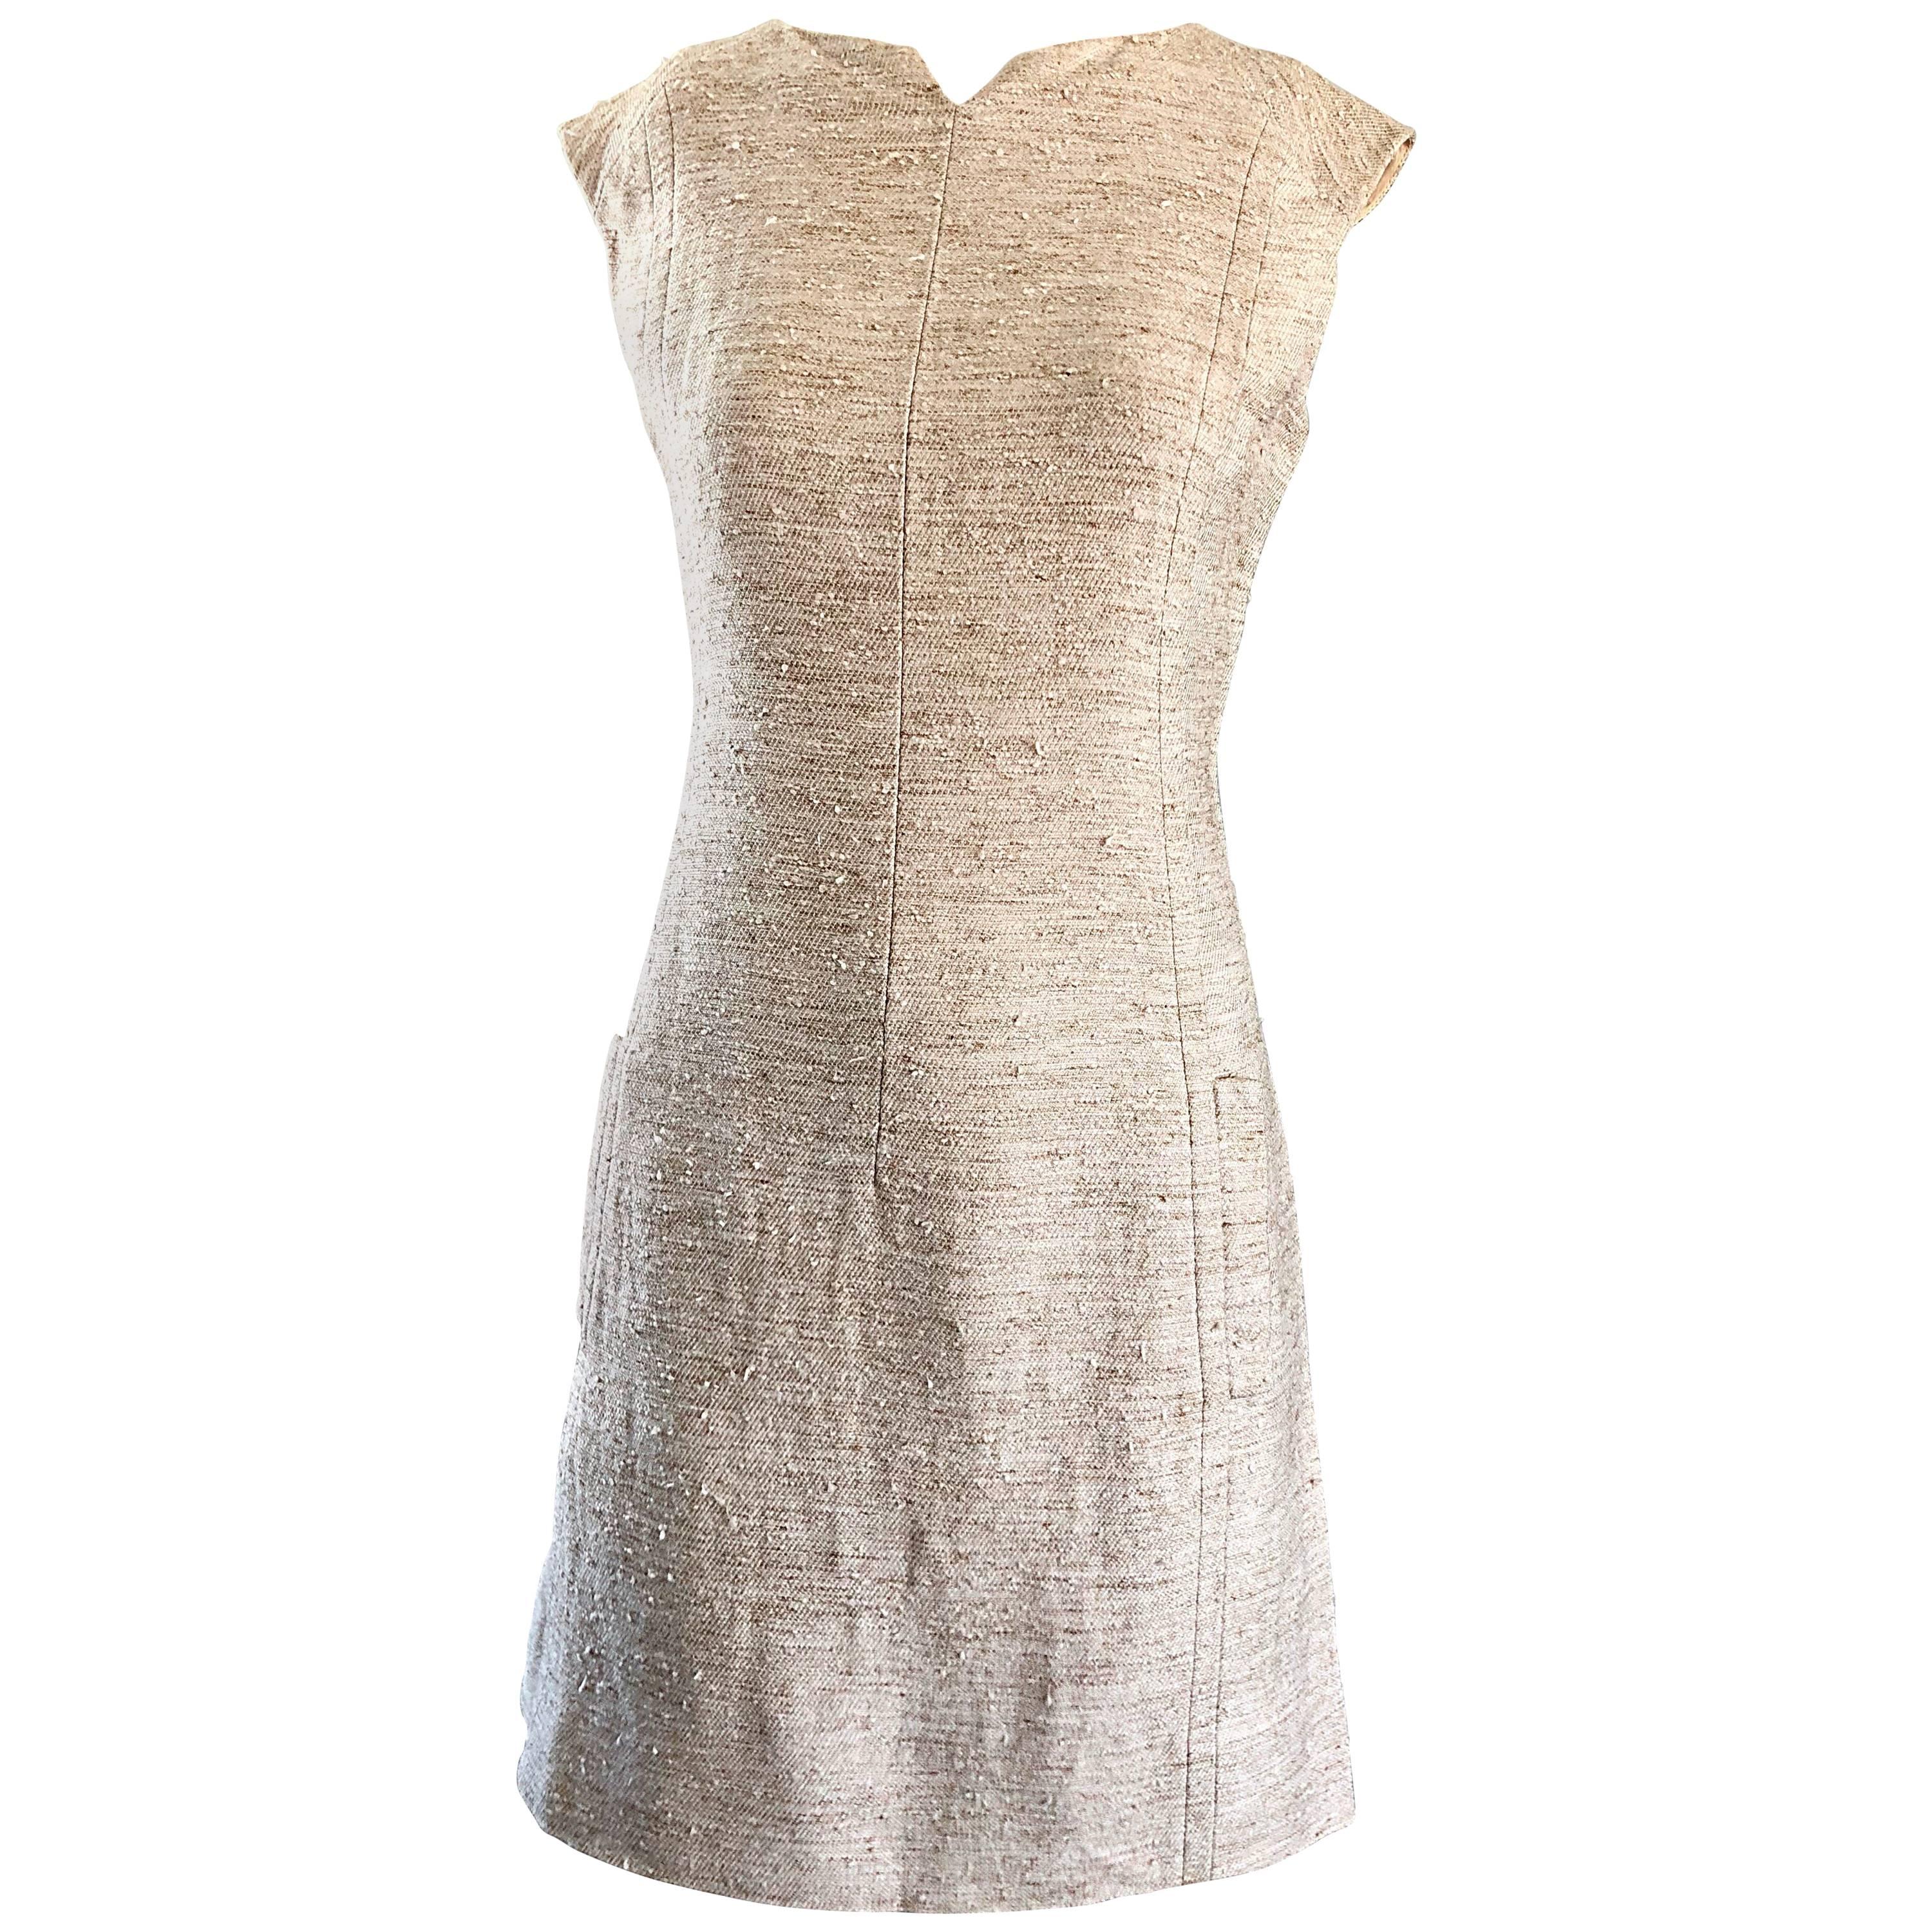 Chic 1960s Oatmeal Beige Irish Linen Vintage 60s A Line Dress w/ Pockets For Sale